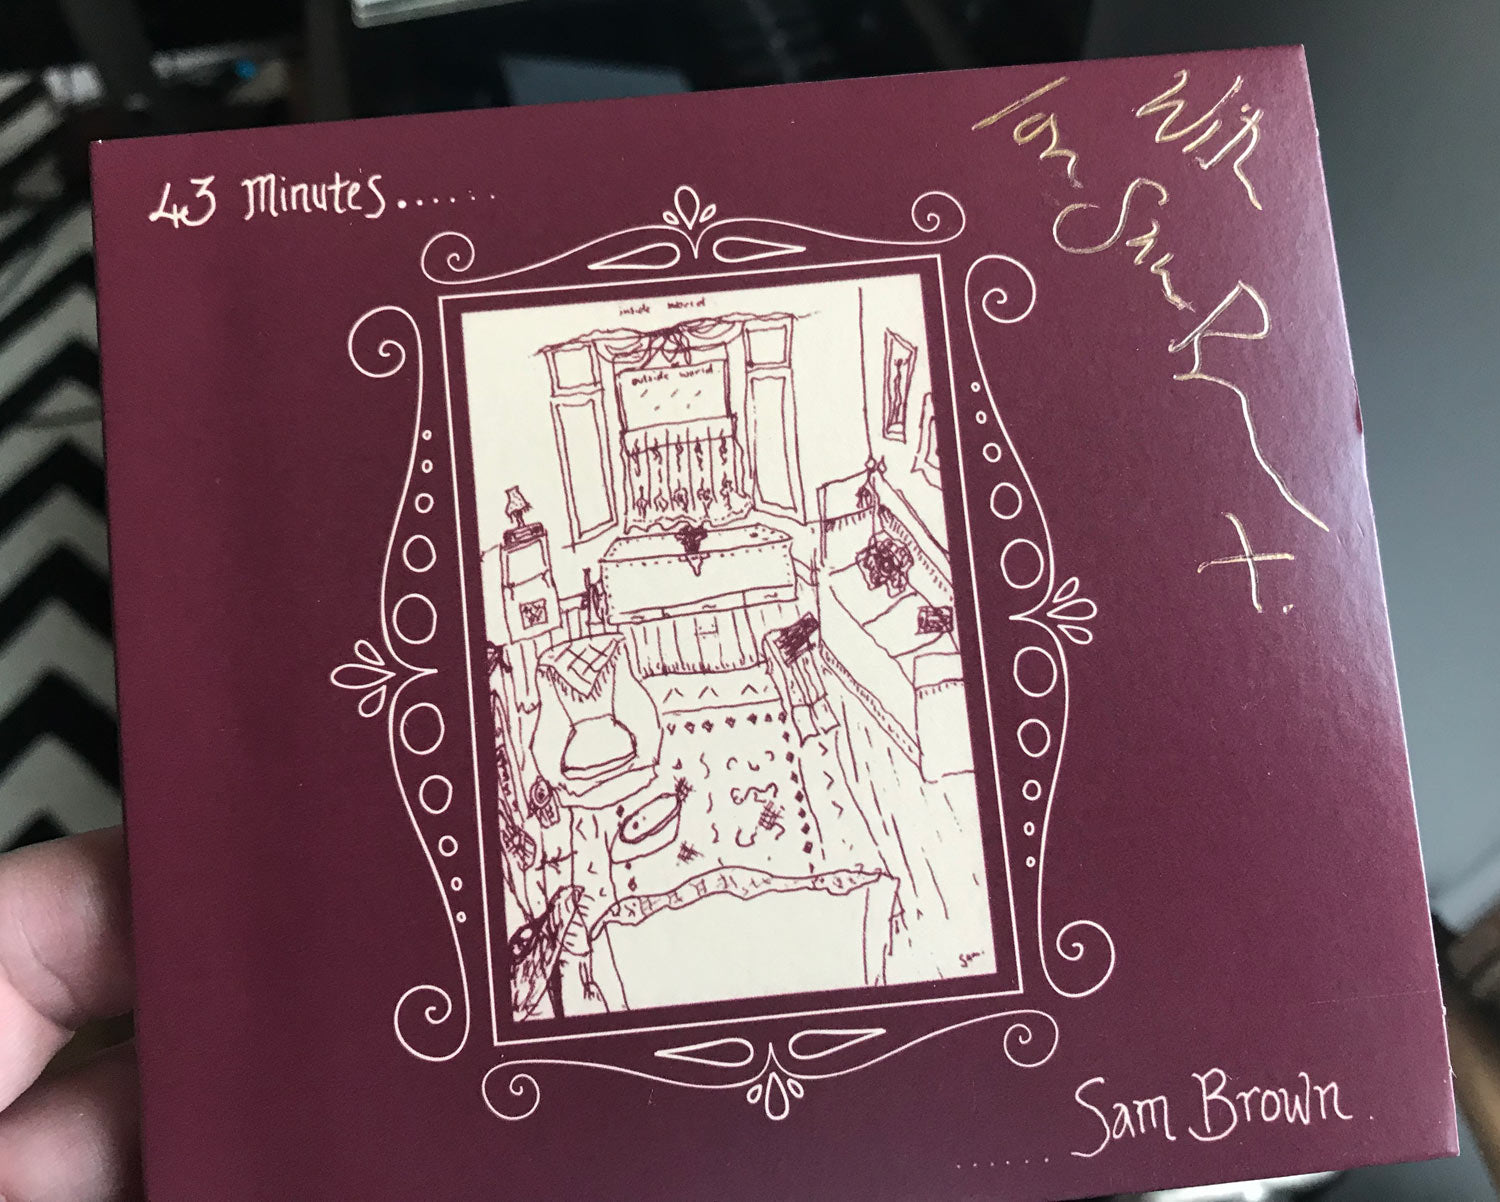 Sam Brown / 43 Minutes signed CD